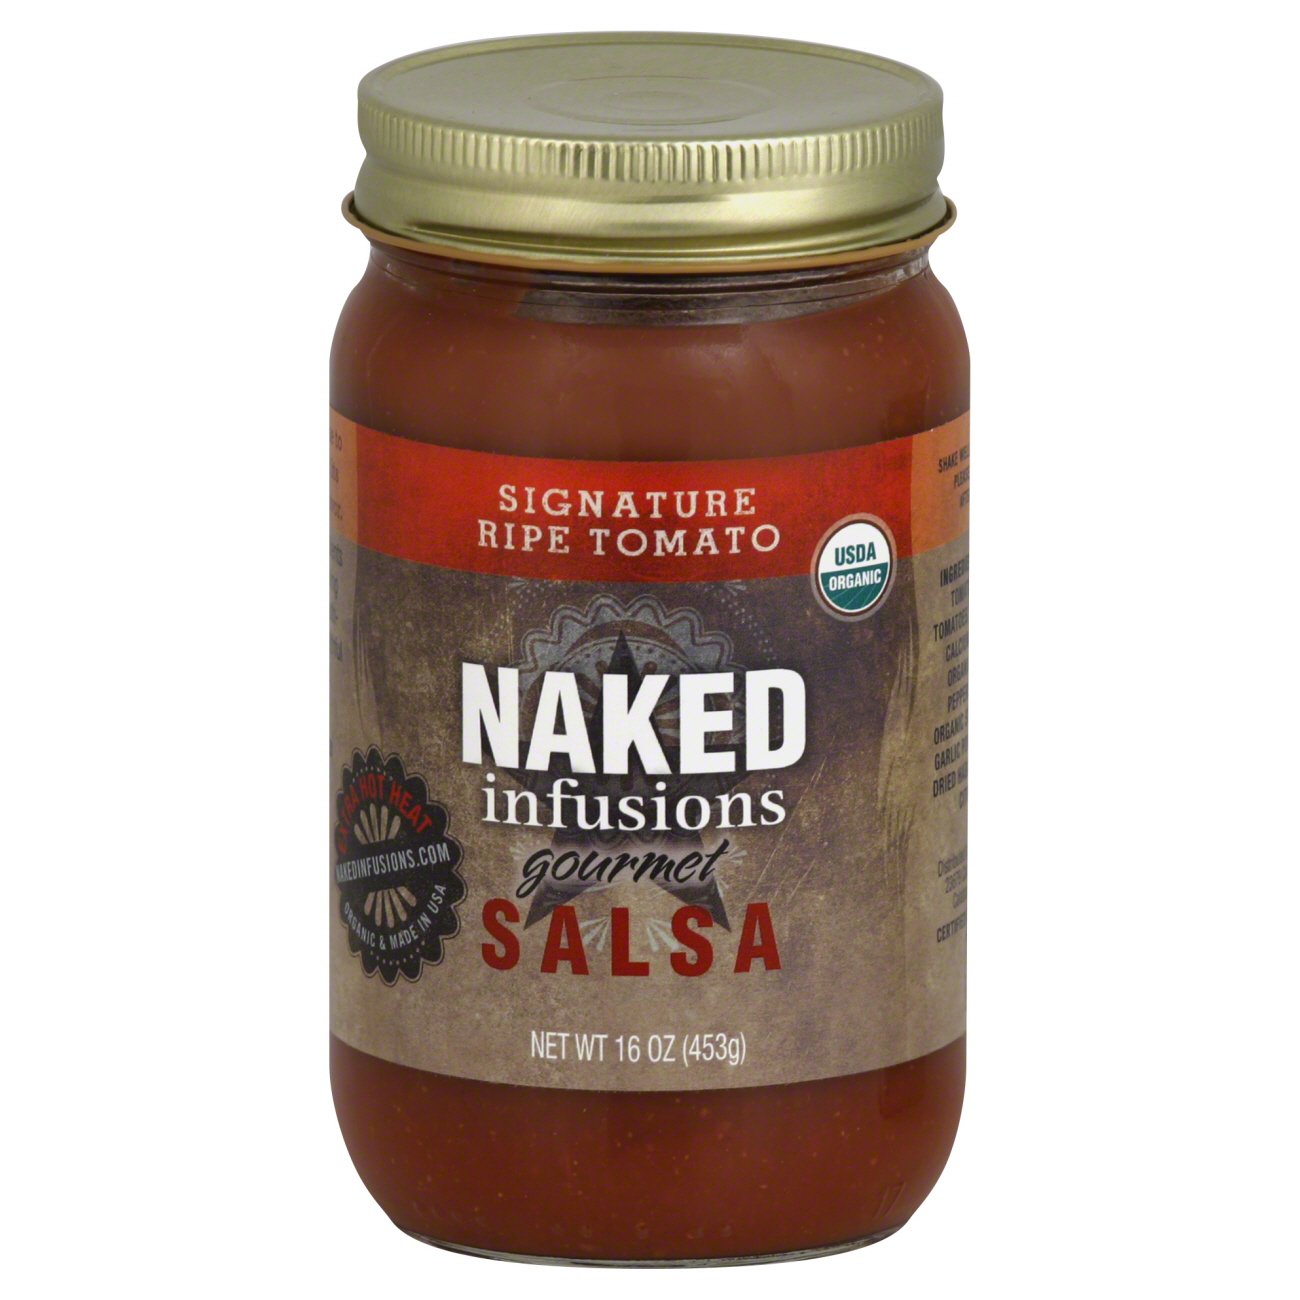 Naked Infusions Organic Salsa Ripe Tomato Hot Shop Salsa Dip At H E B